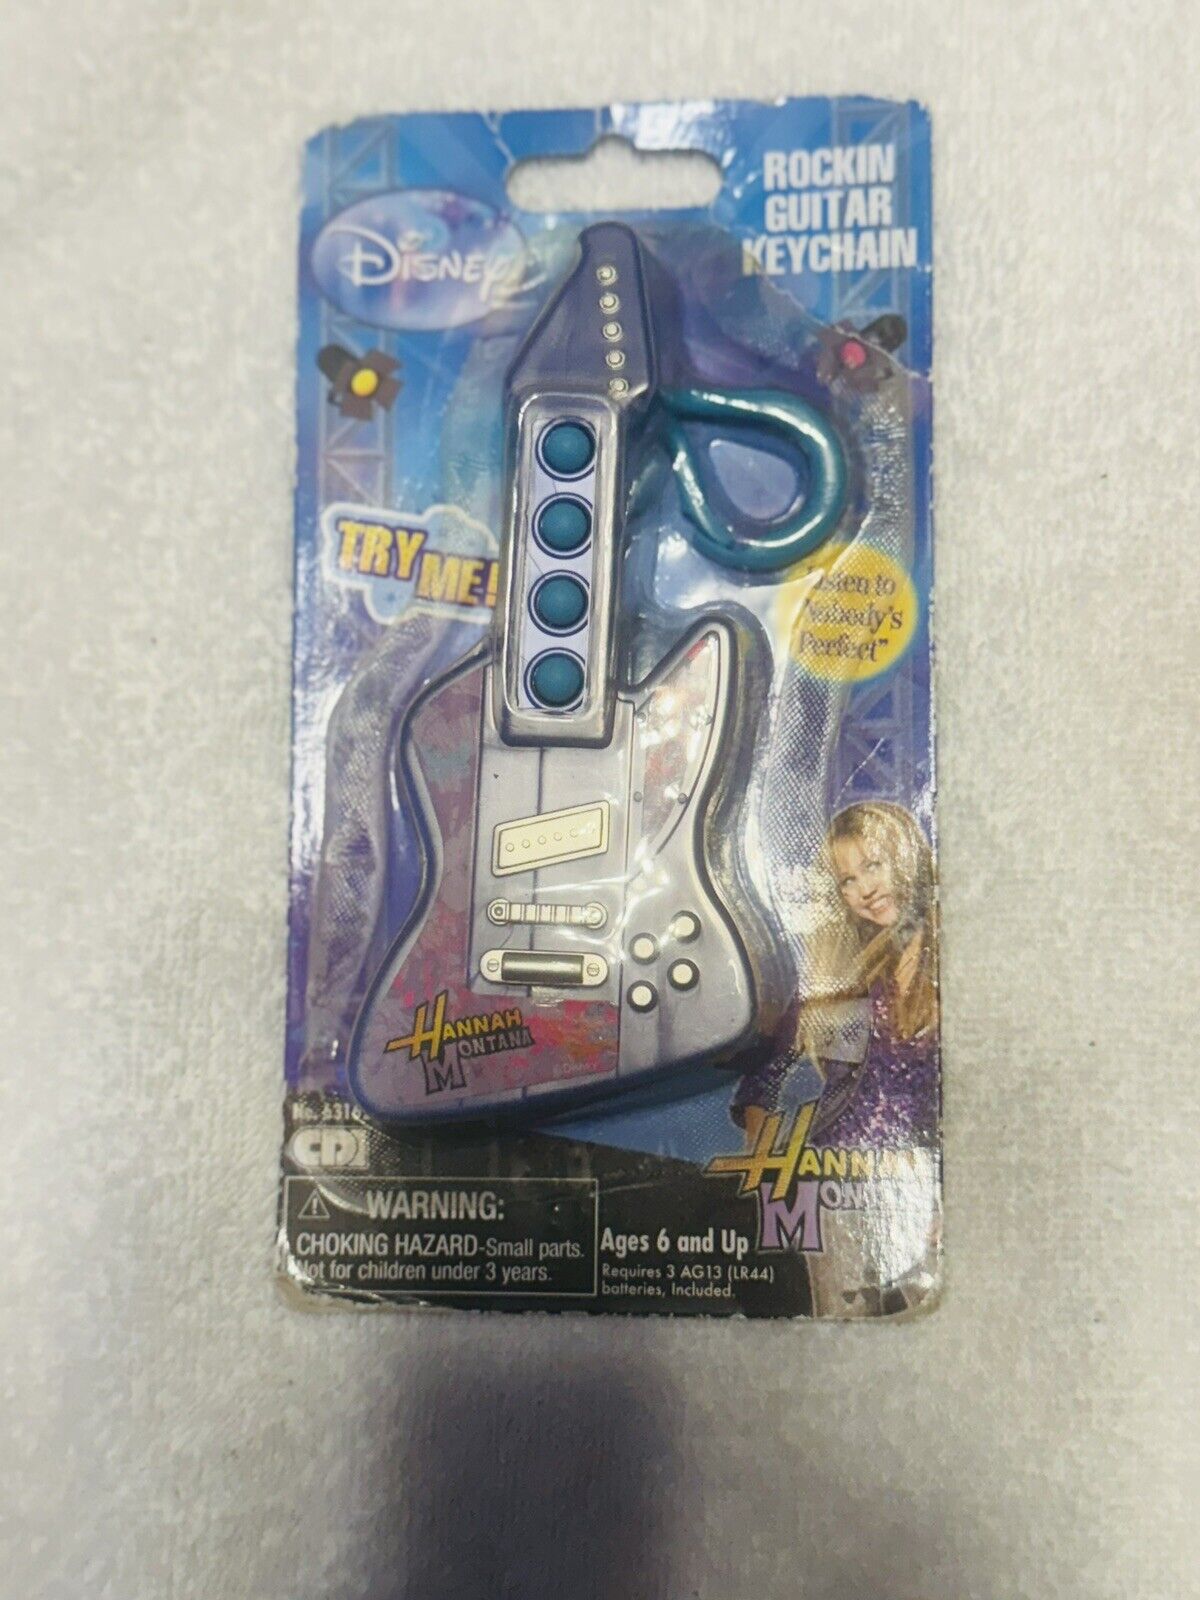 NEW Hannah Montana Rockin Guitar Keychain Musical by Disney TV Show Collectible